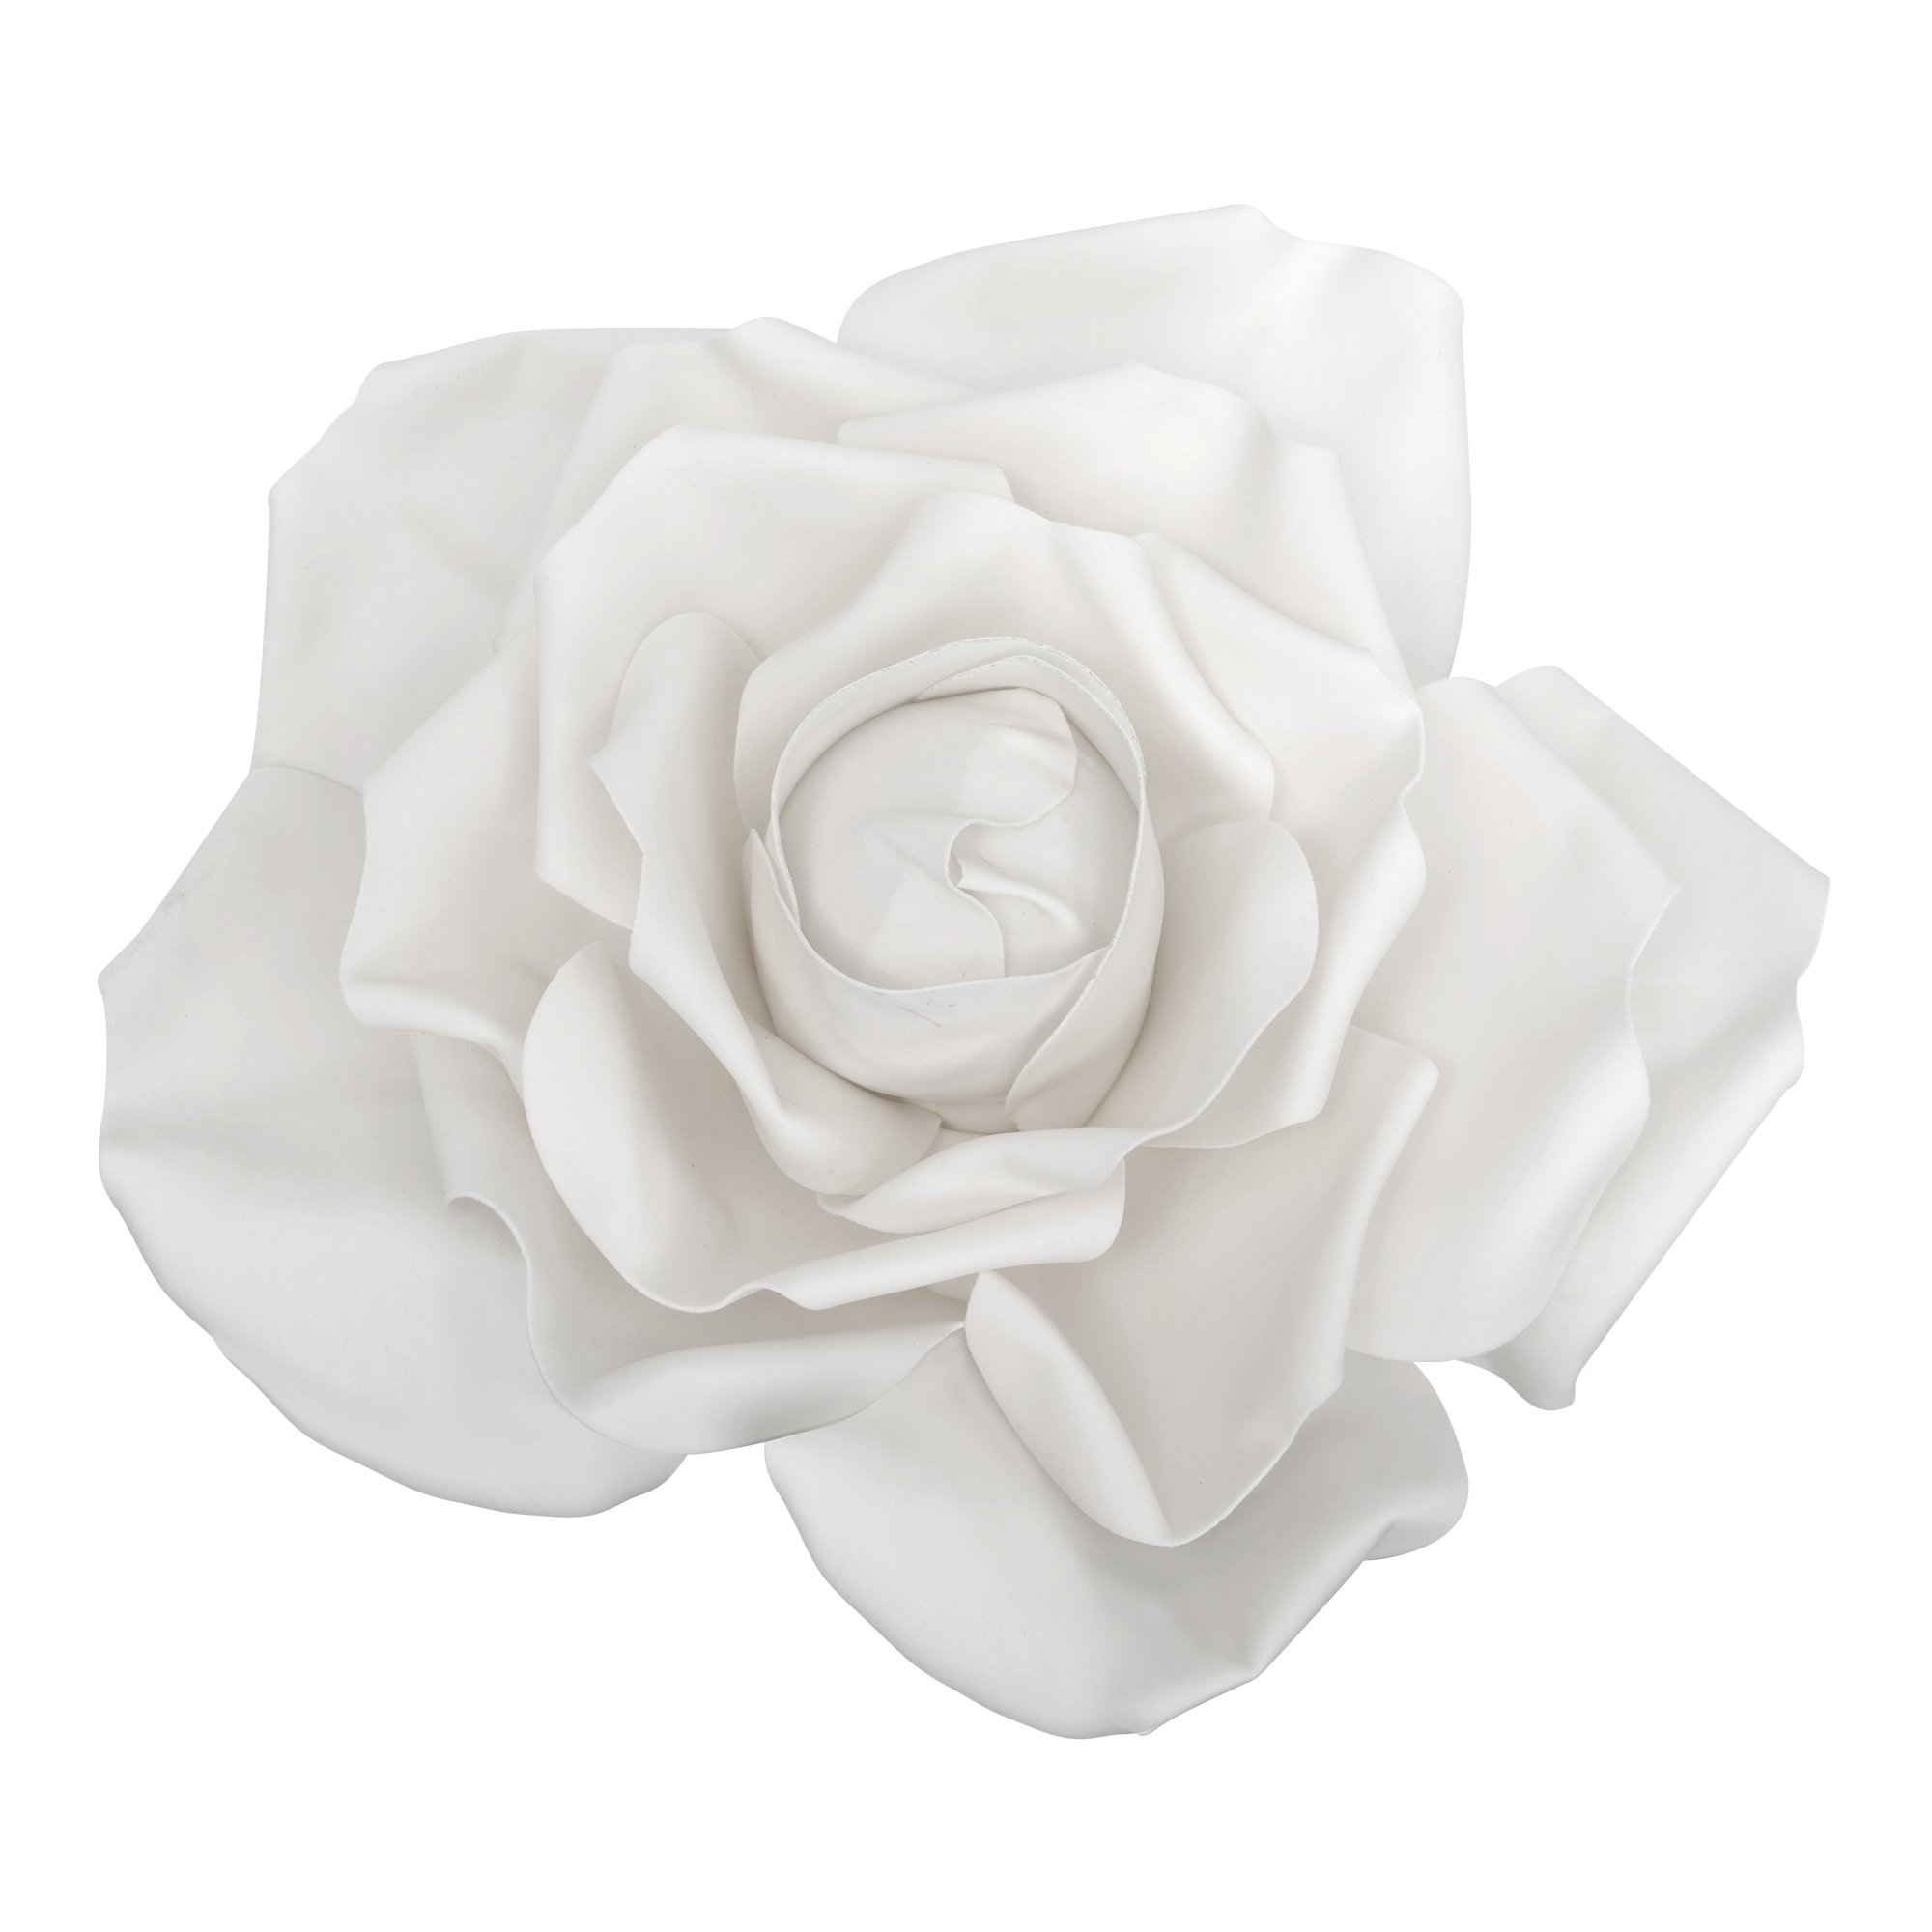 Foam Rose With LED Light 12" - White